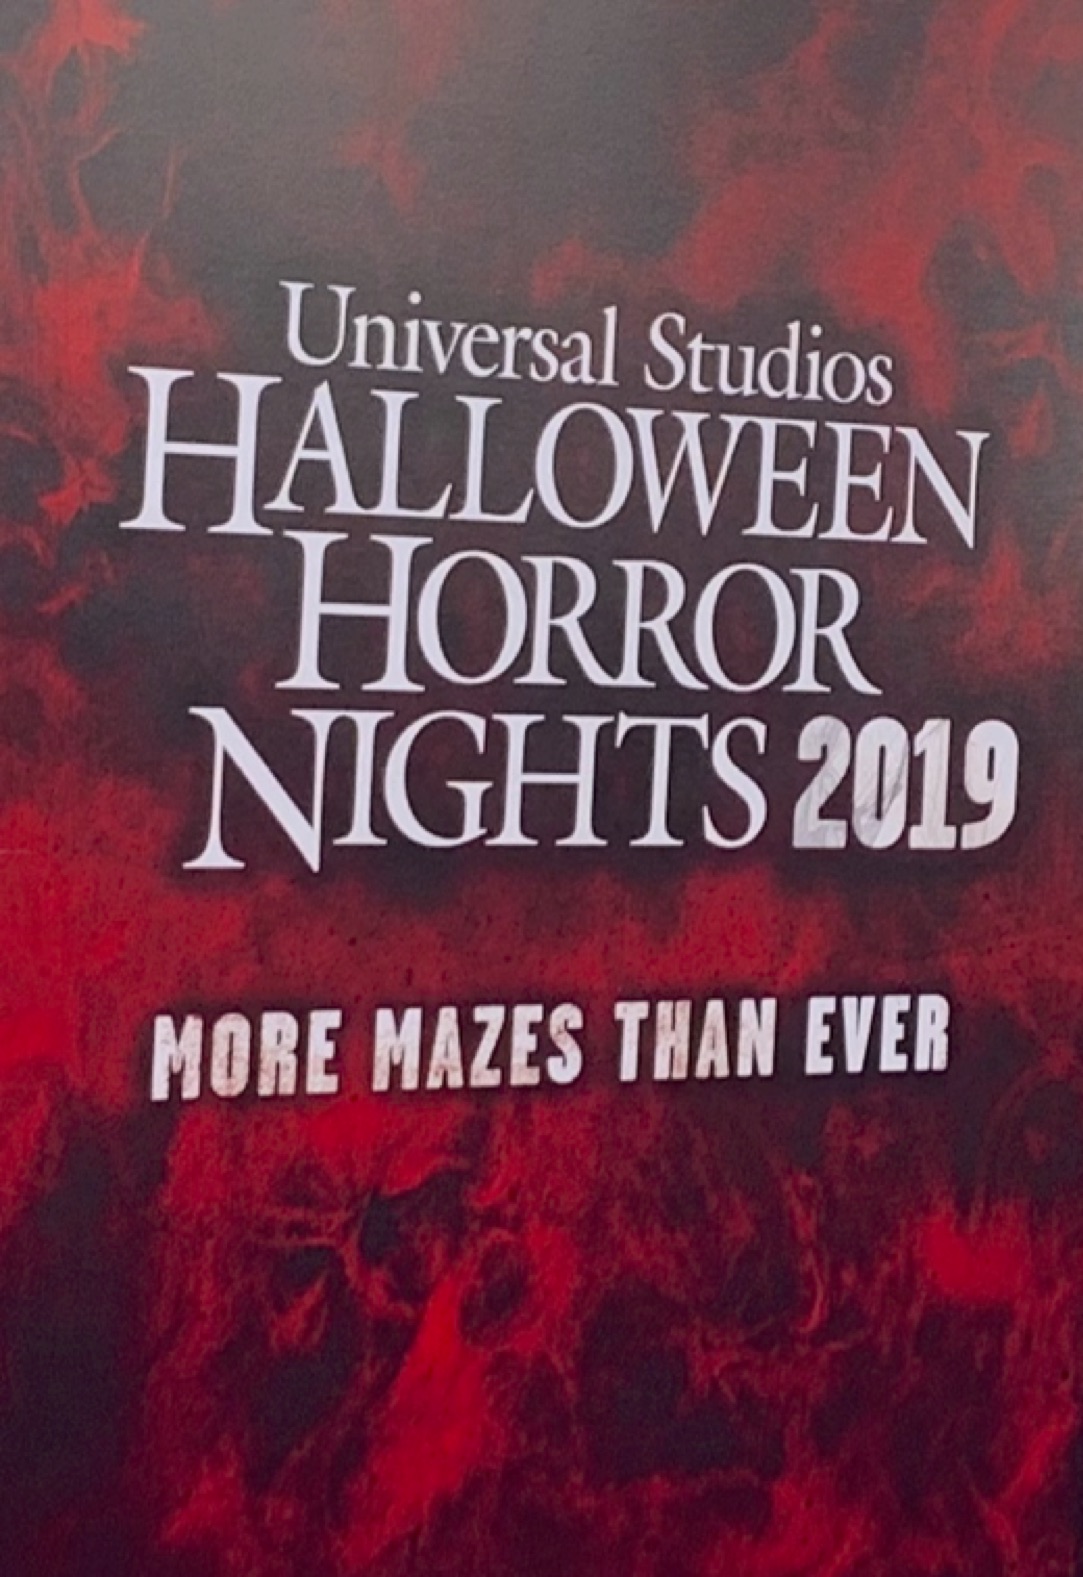 Hollywood Horror Nights 2019